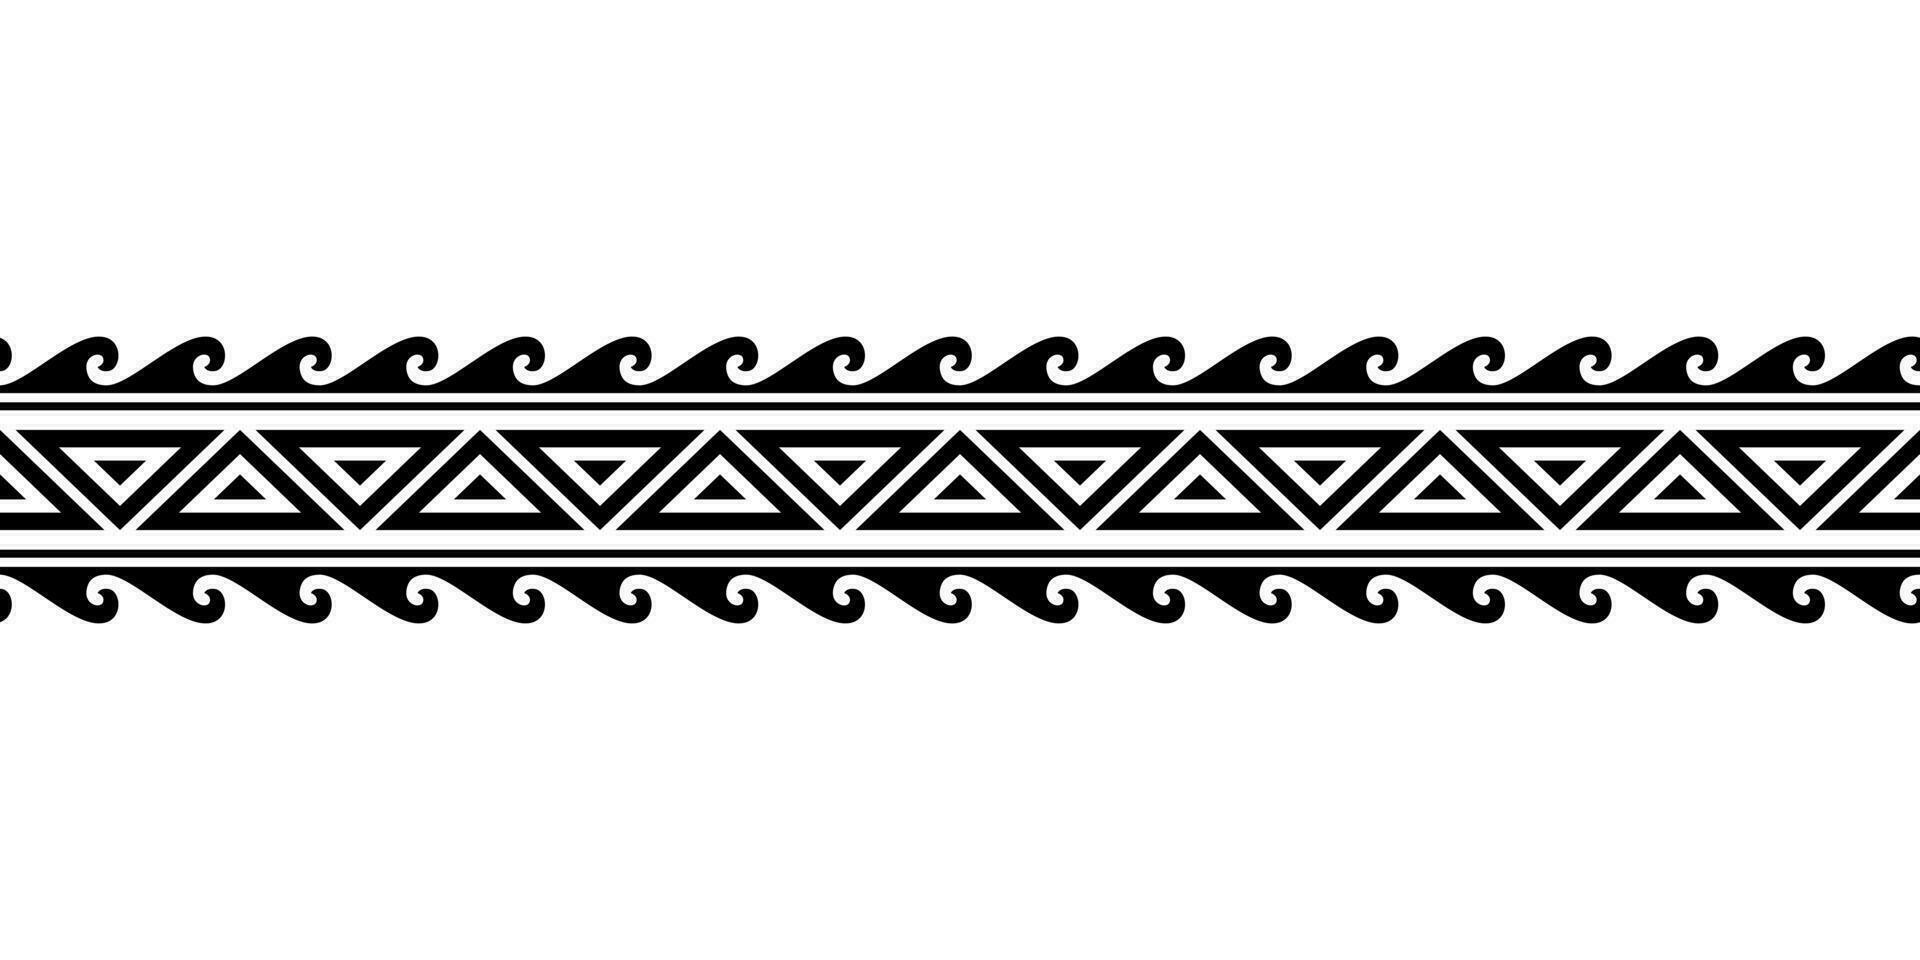 Maori polynesian tattoo bracelet with waves. Tribal sleeve seamless pattern vector. vector